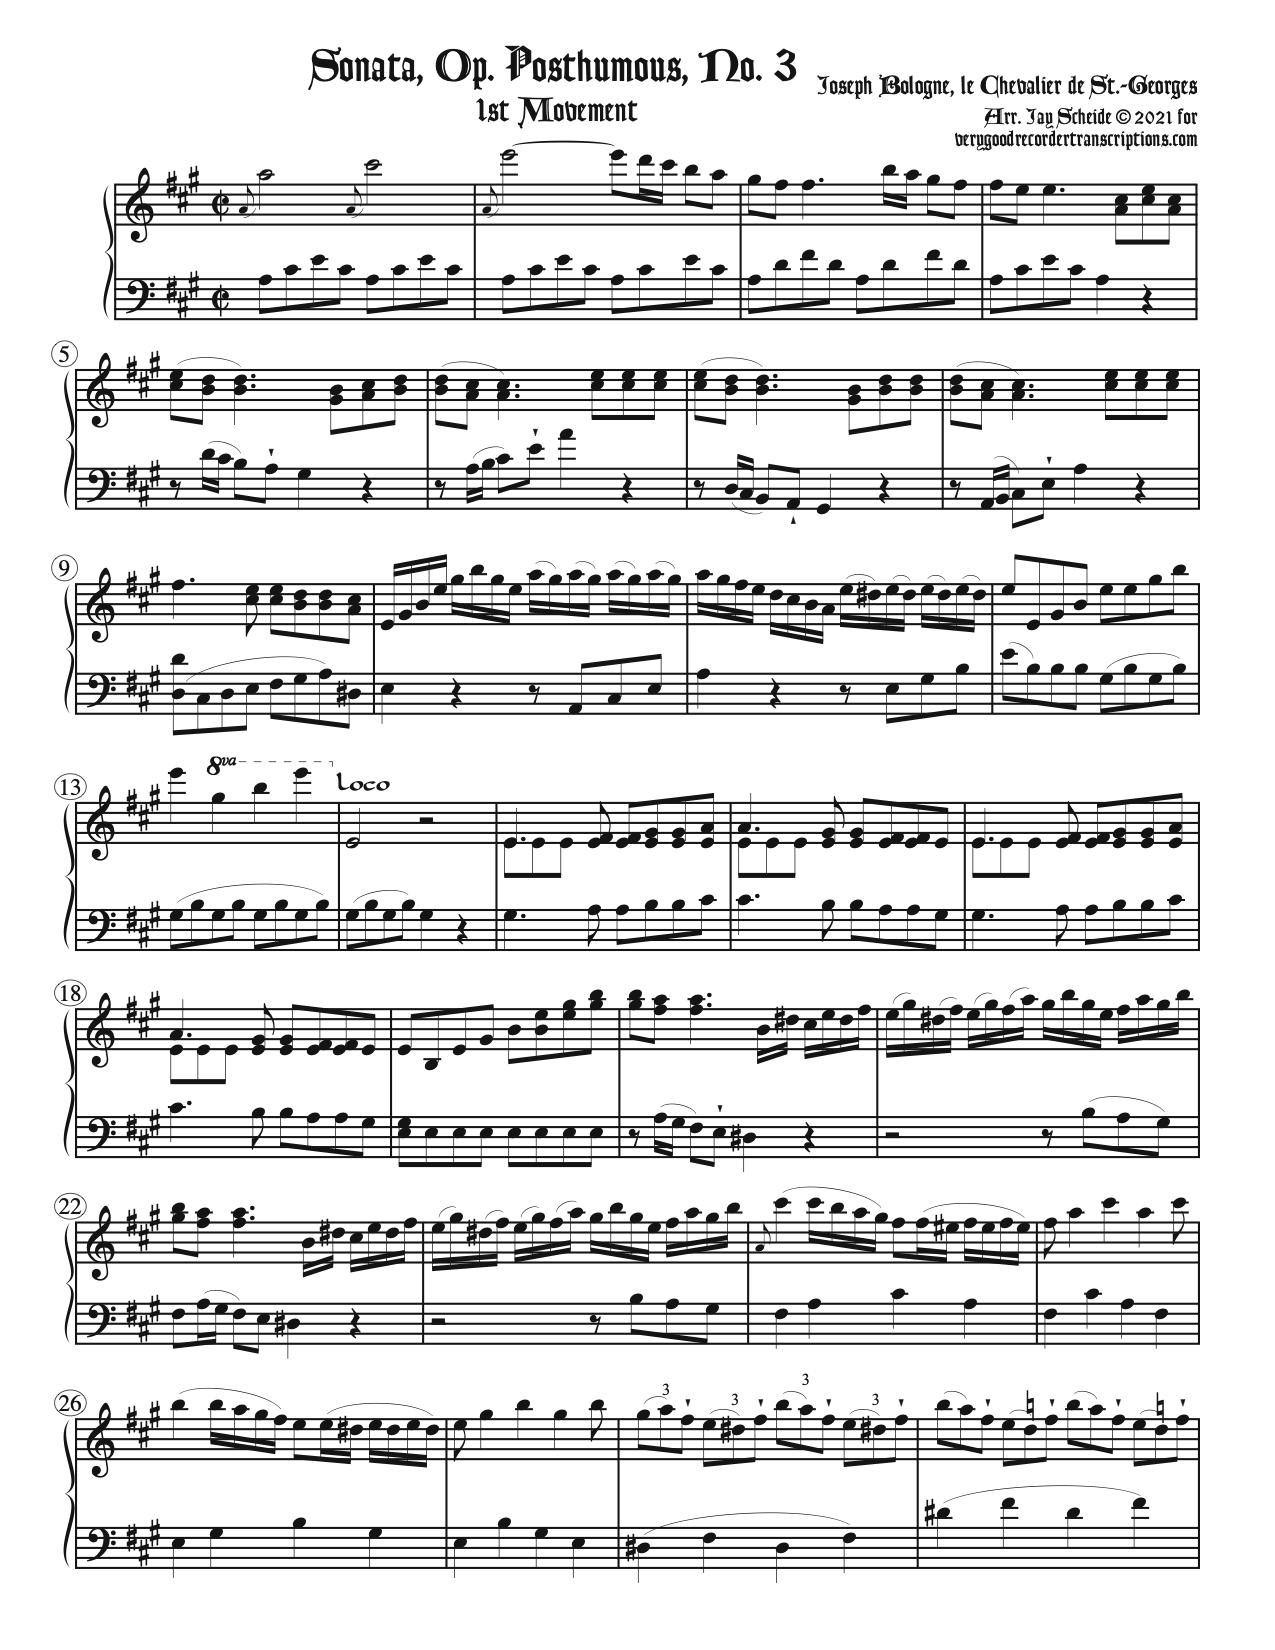 Duet Sonata Op. Posthumous No. 3